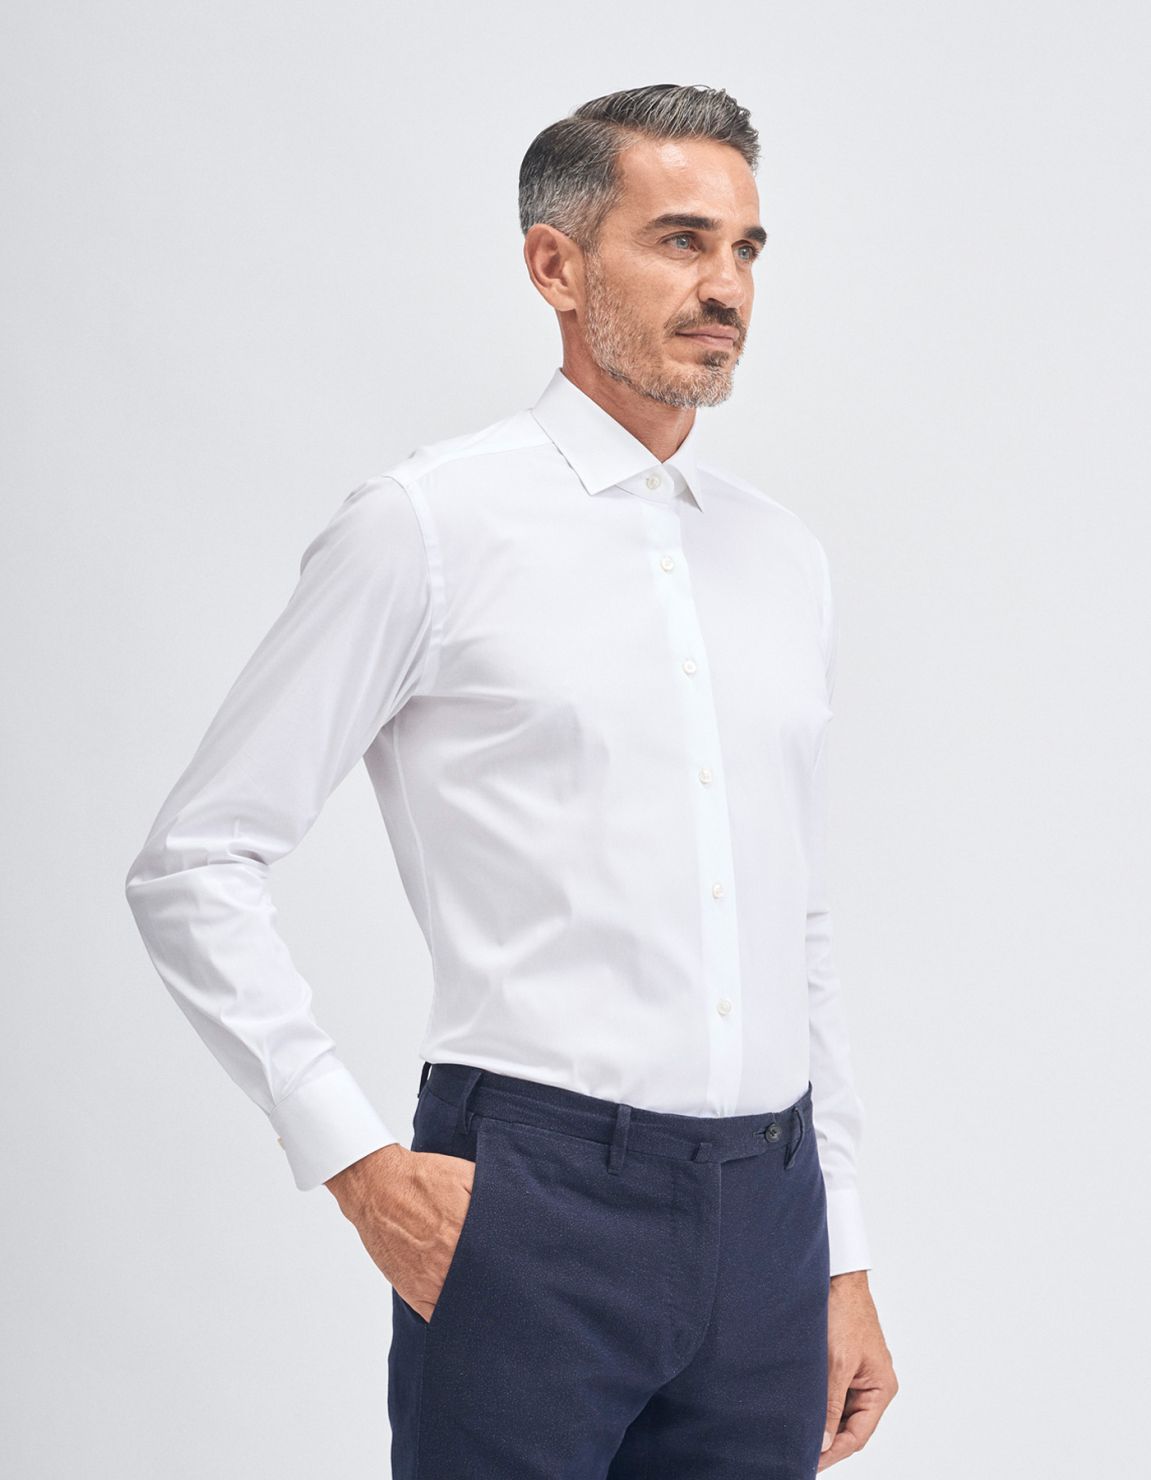 Shirt Collar small cutaway White Canvas Tailor Custom Fit 1